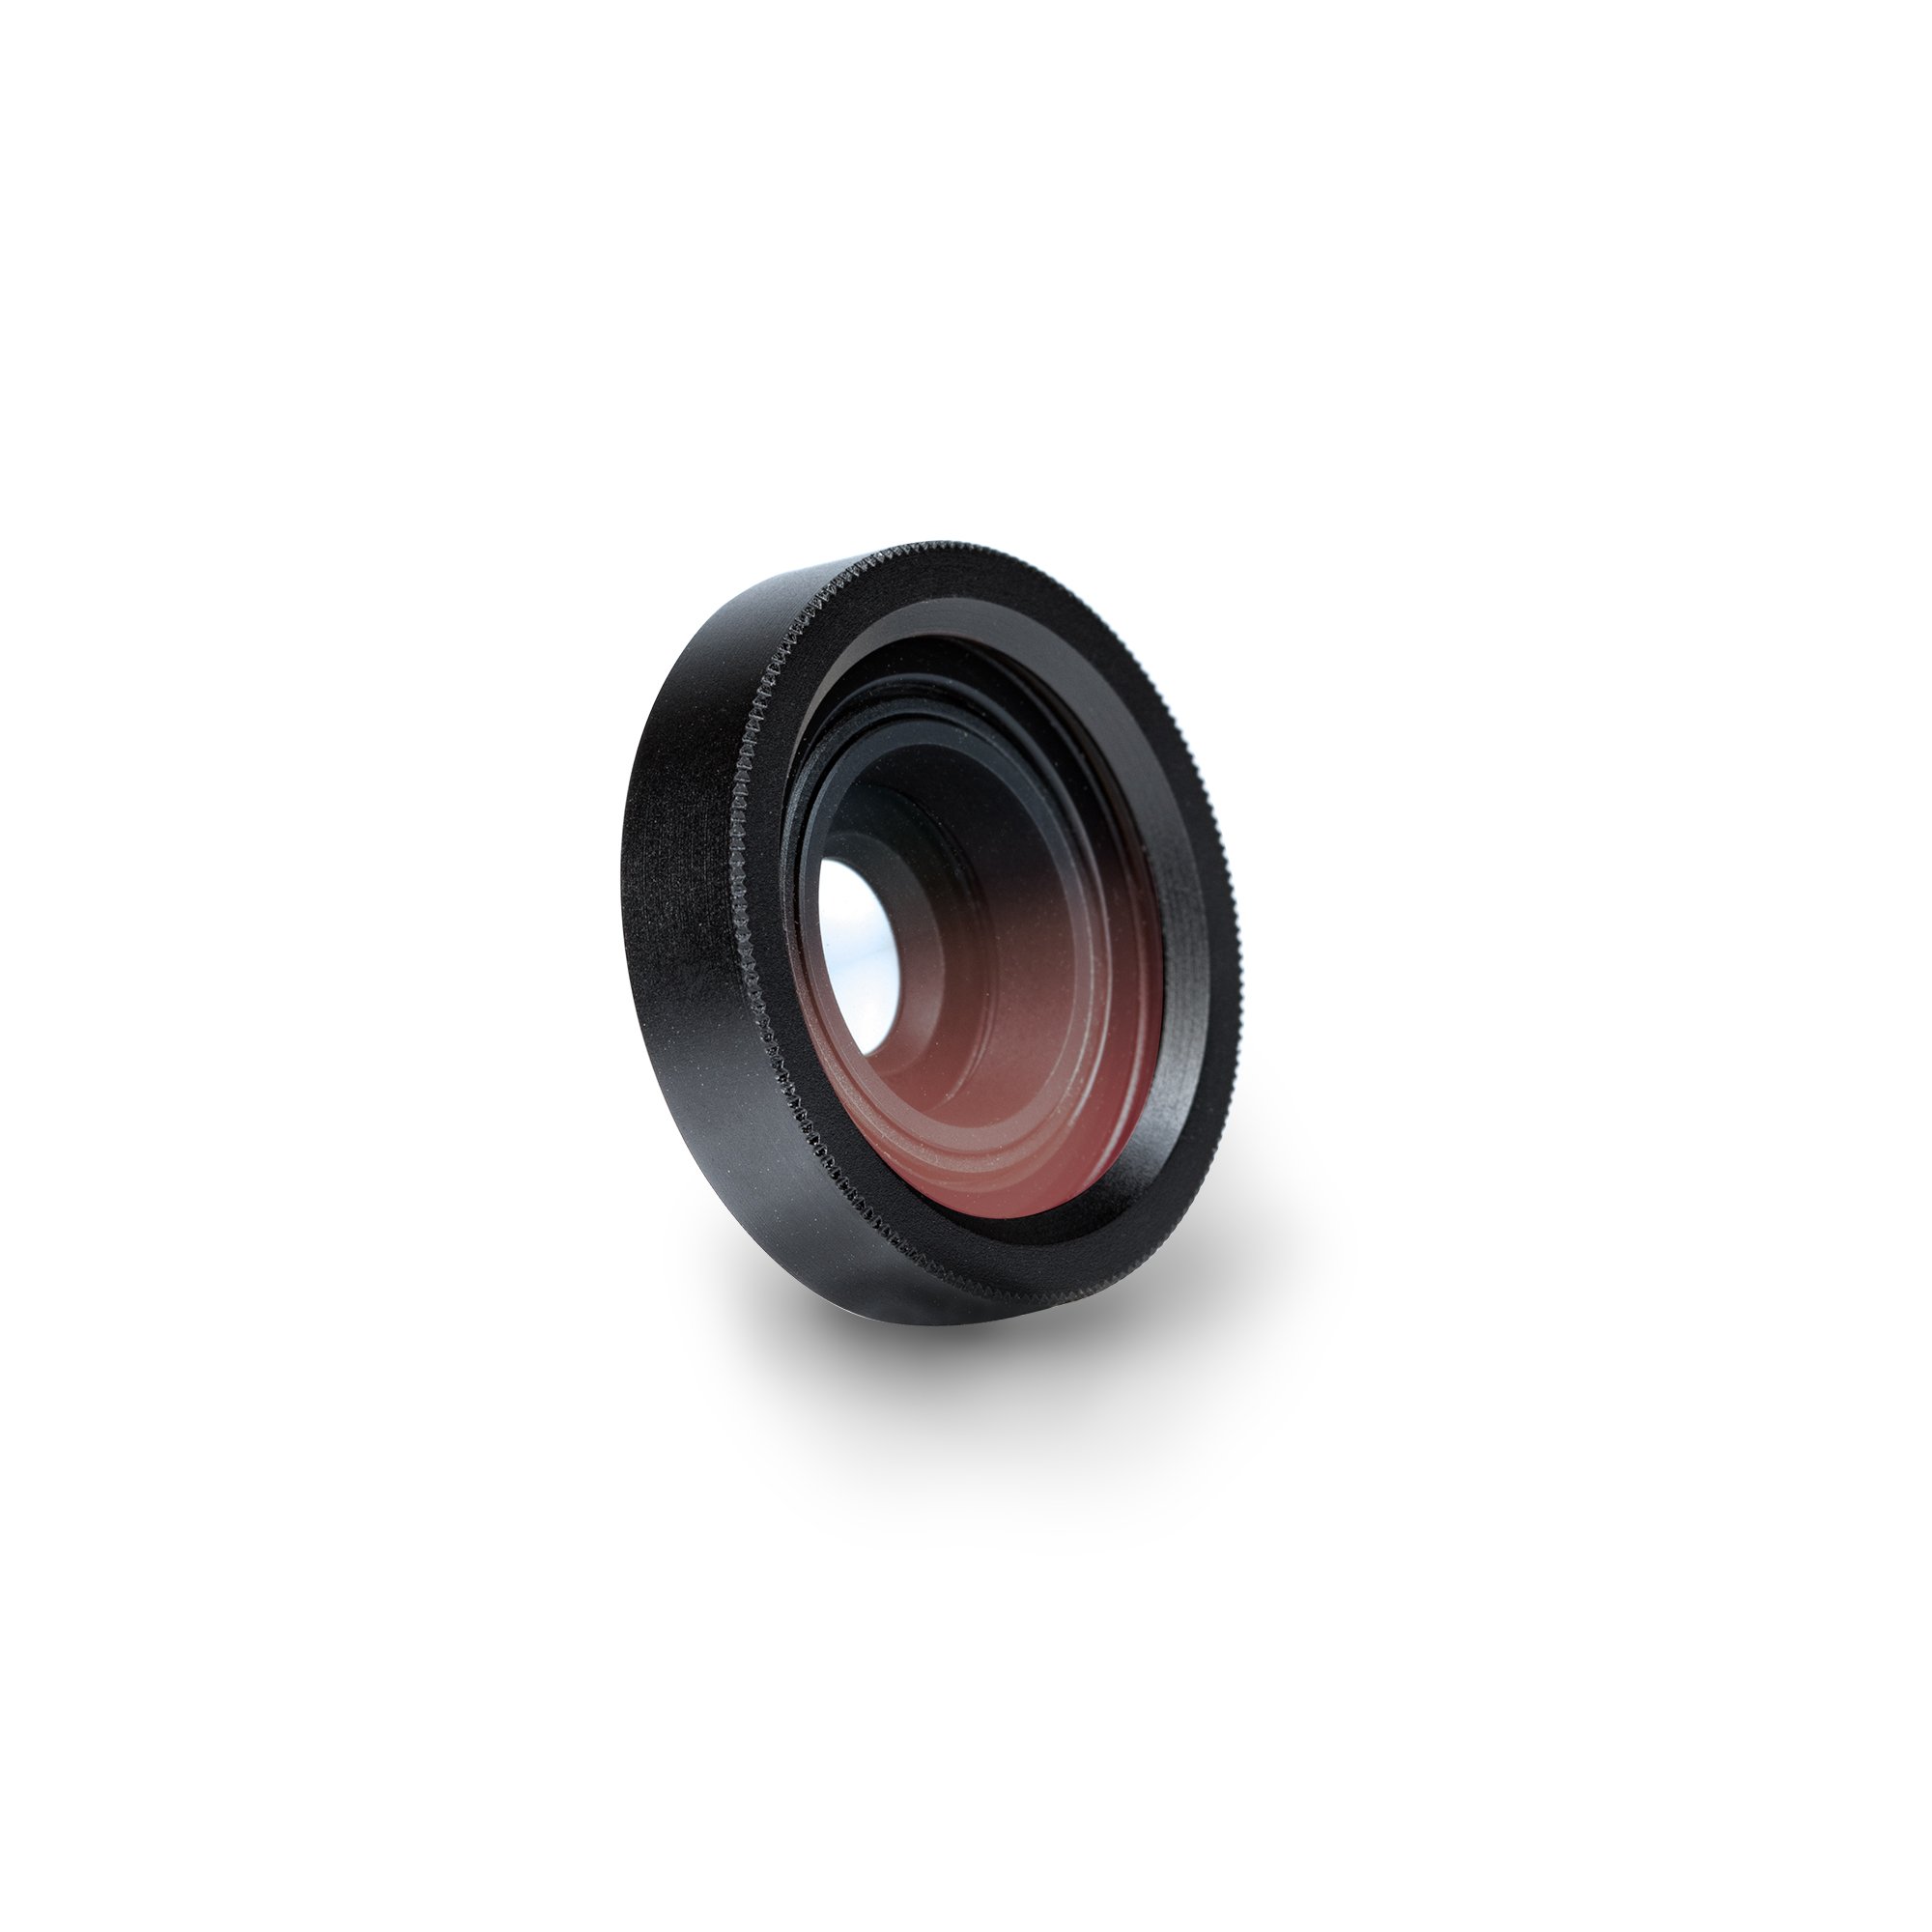 TrueLUX Macro Lens for iPhone - Hitcase